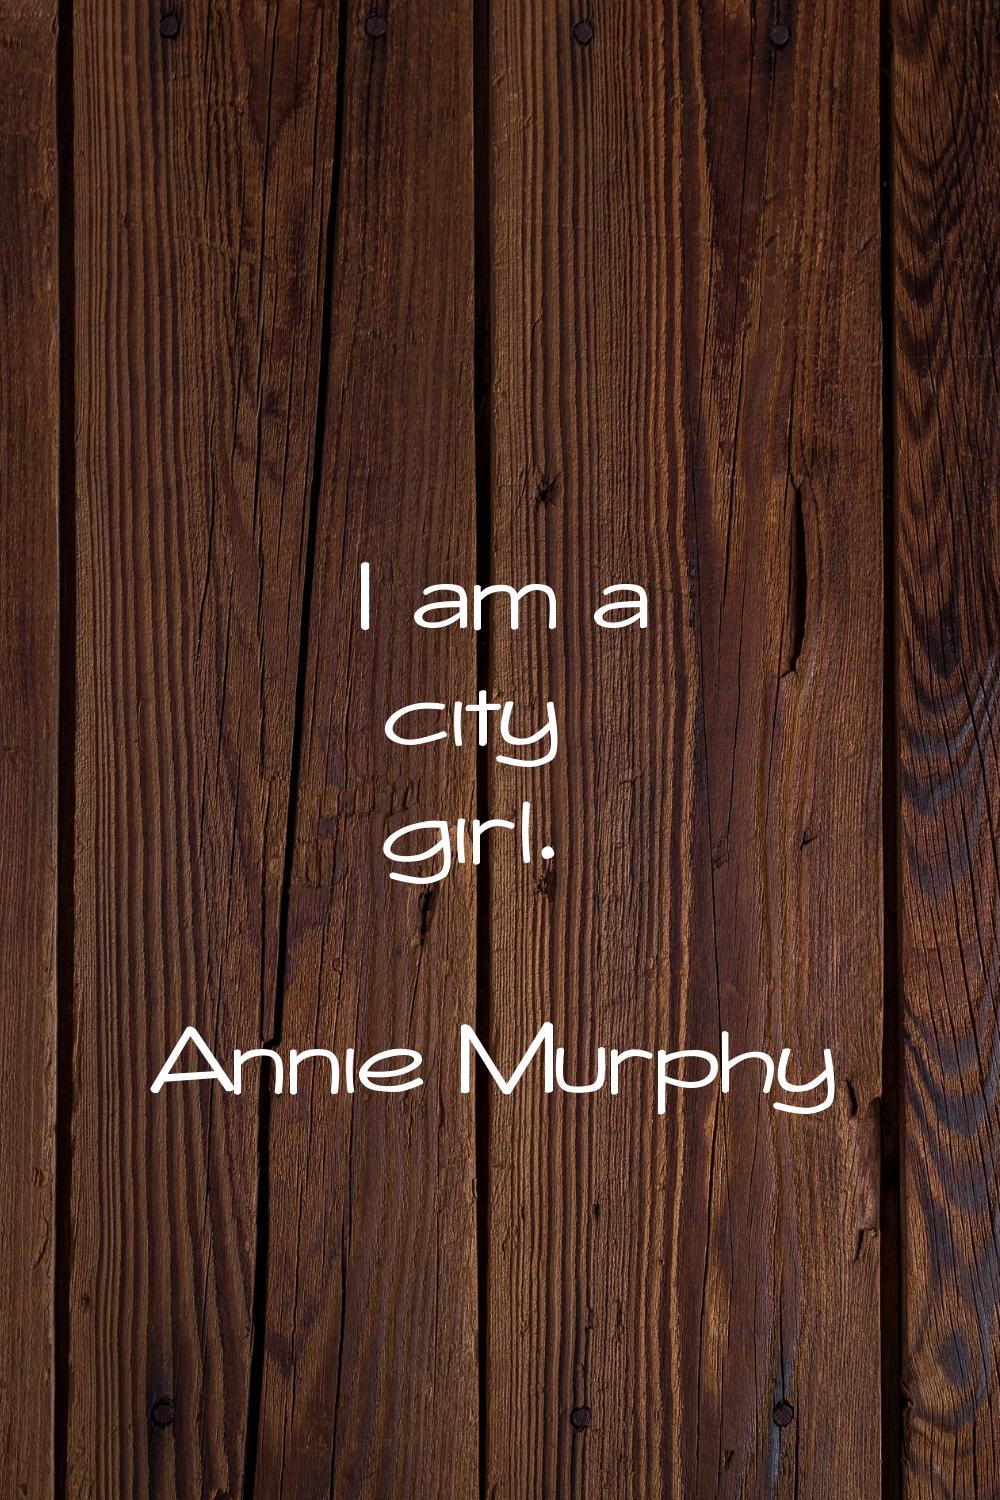 I am a city girl.